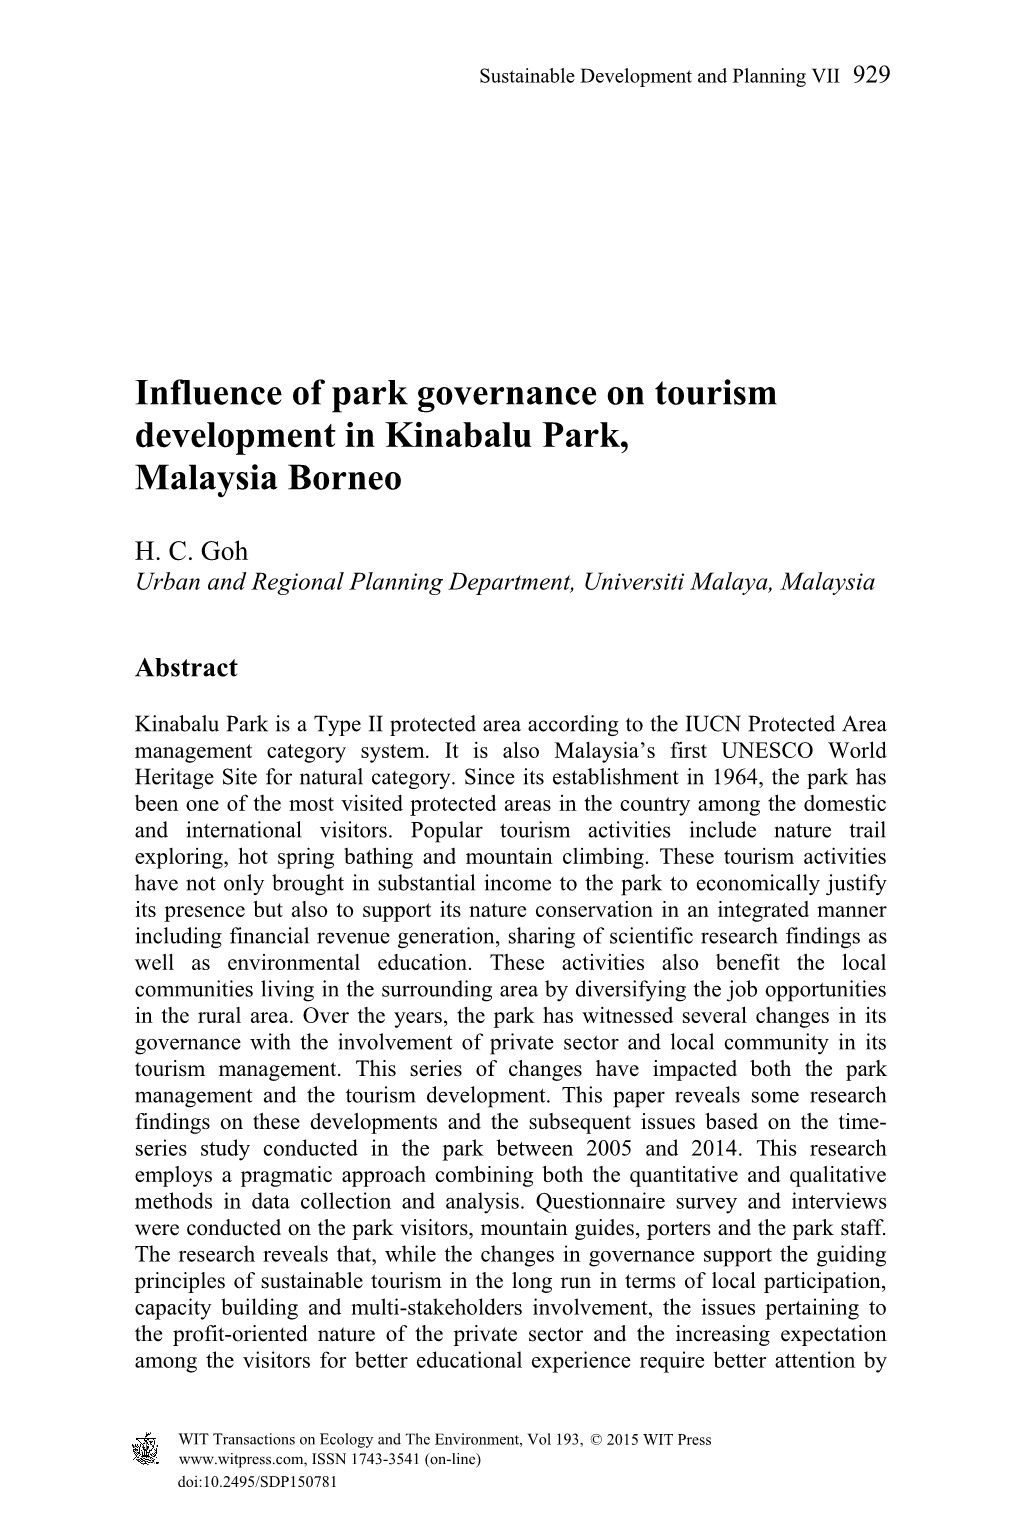 Influence of Park Governance on Tourism Development in Kinabalu Park, Malaysia Borneo